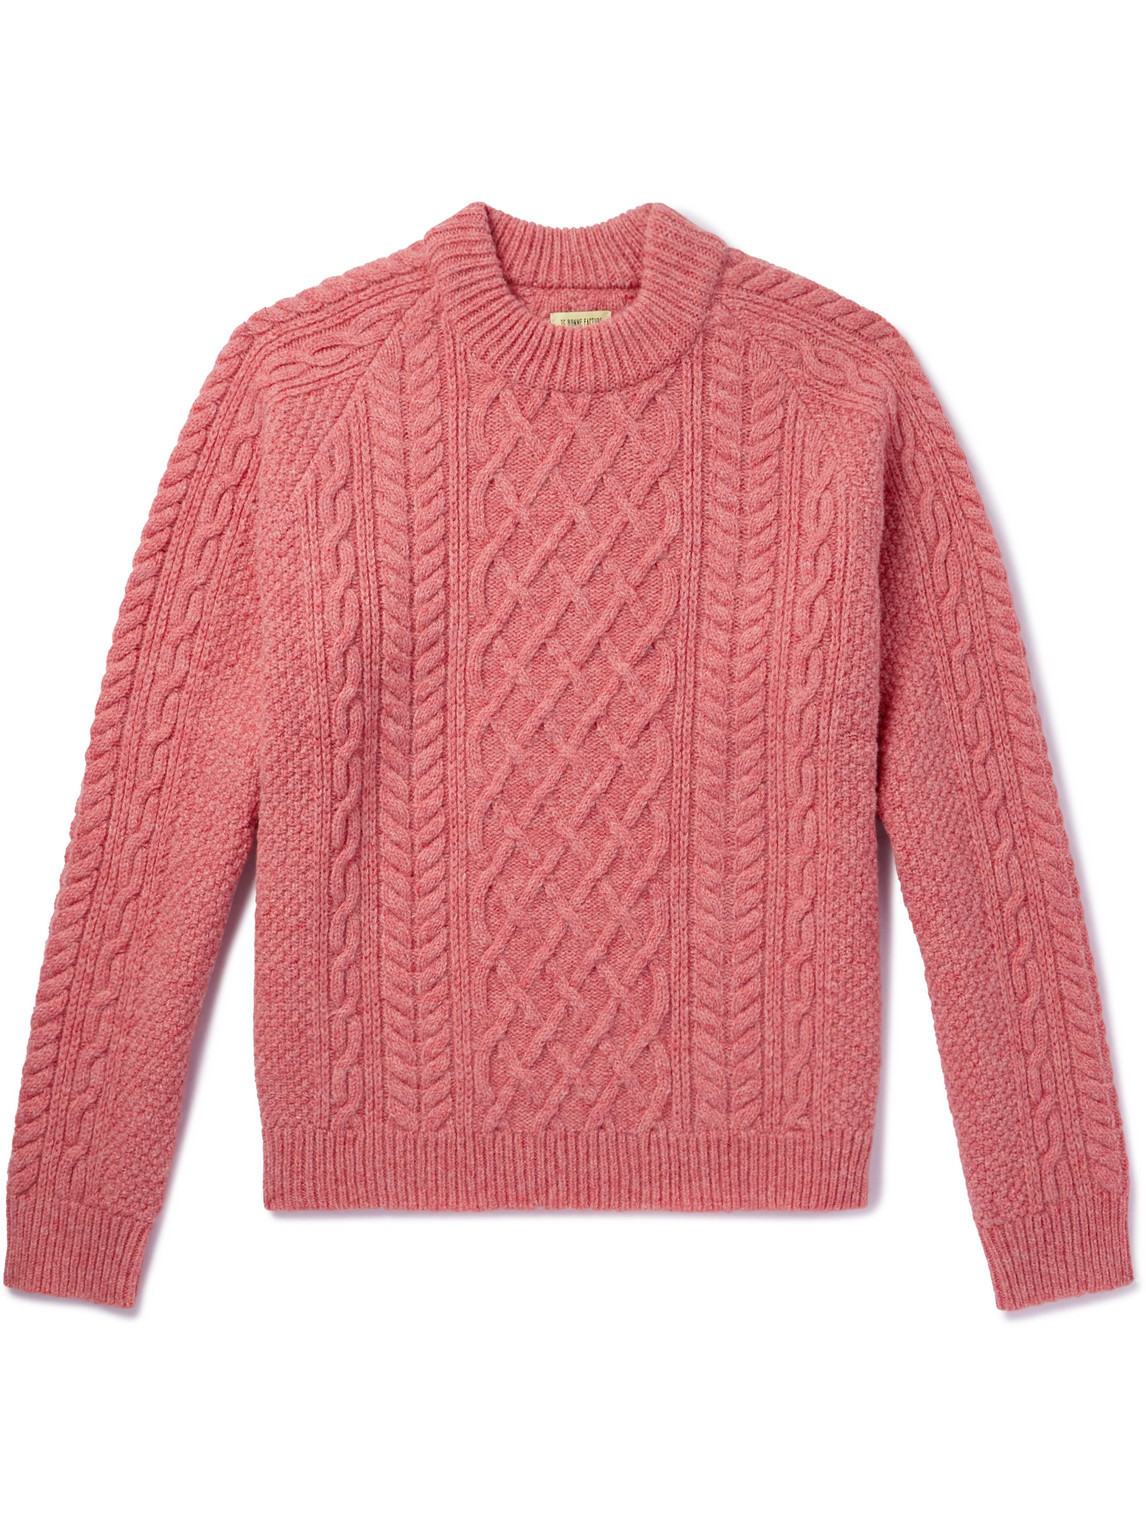 De Bonne Facture Cable-knit Wool Jumper In Pink